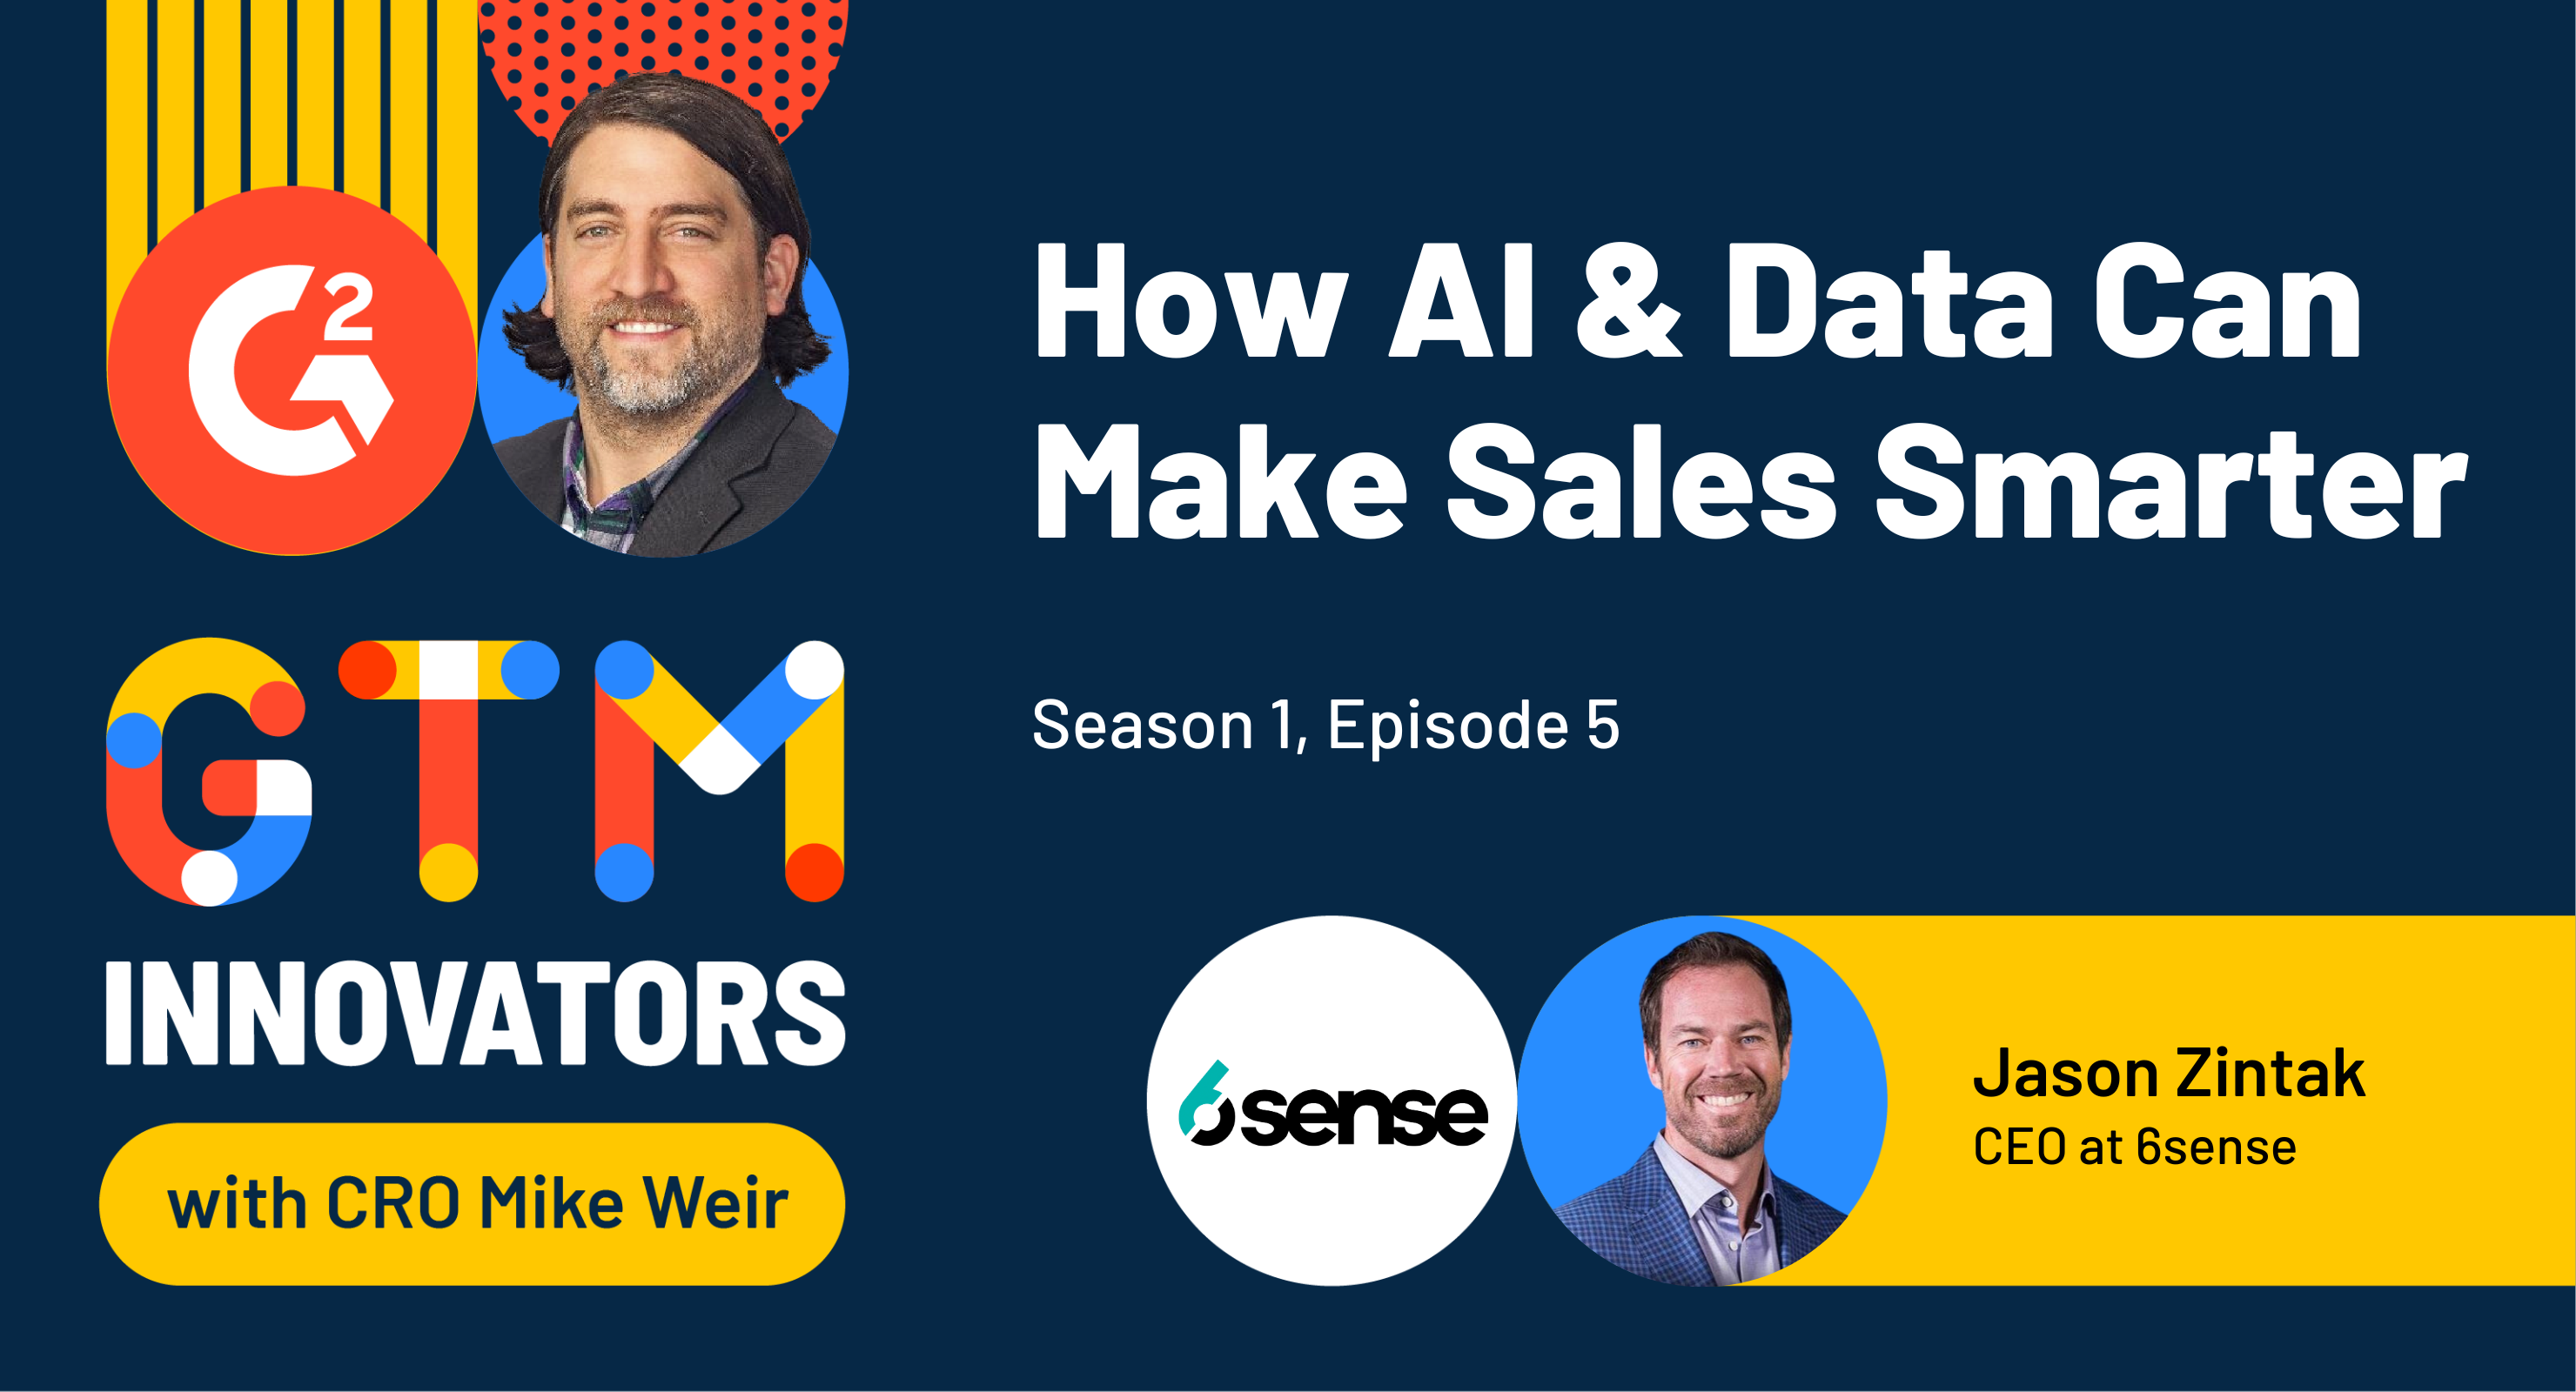 Jason Zintak explains how AI makes sales smarter and more measurable